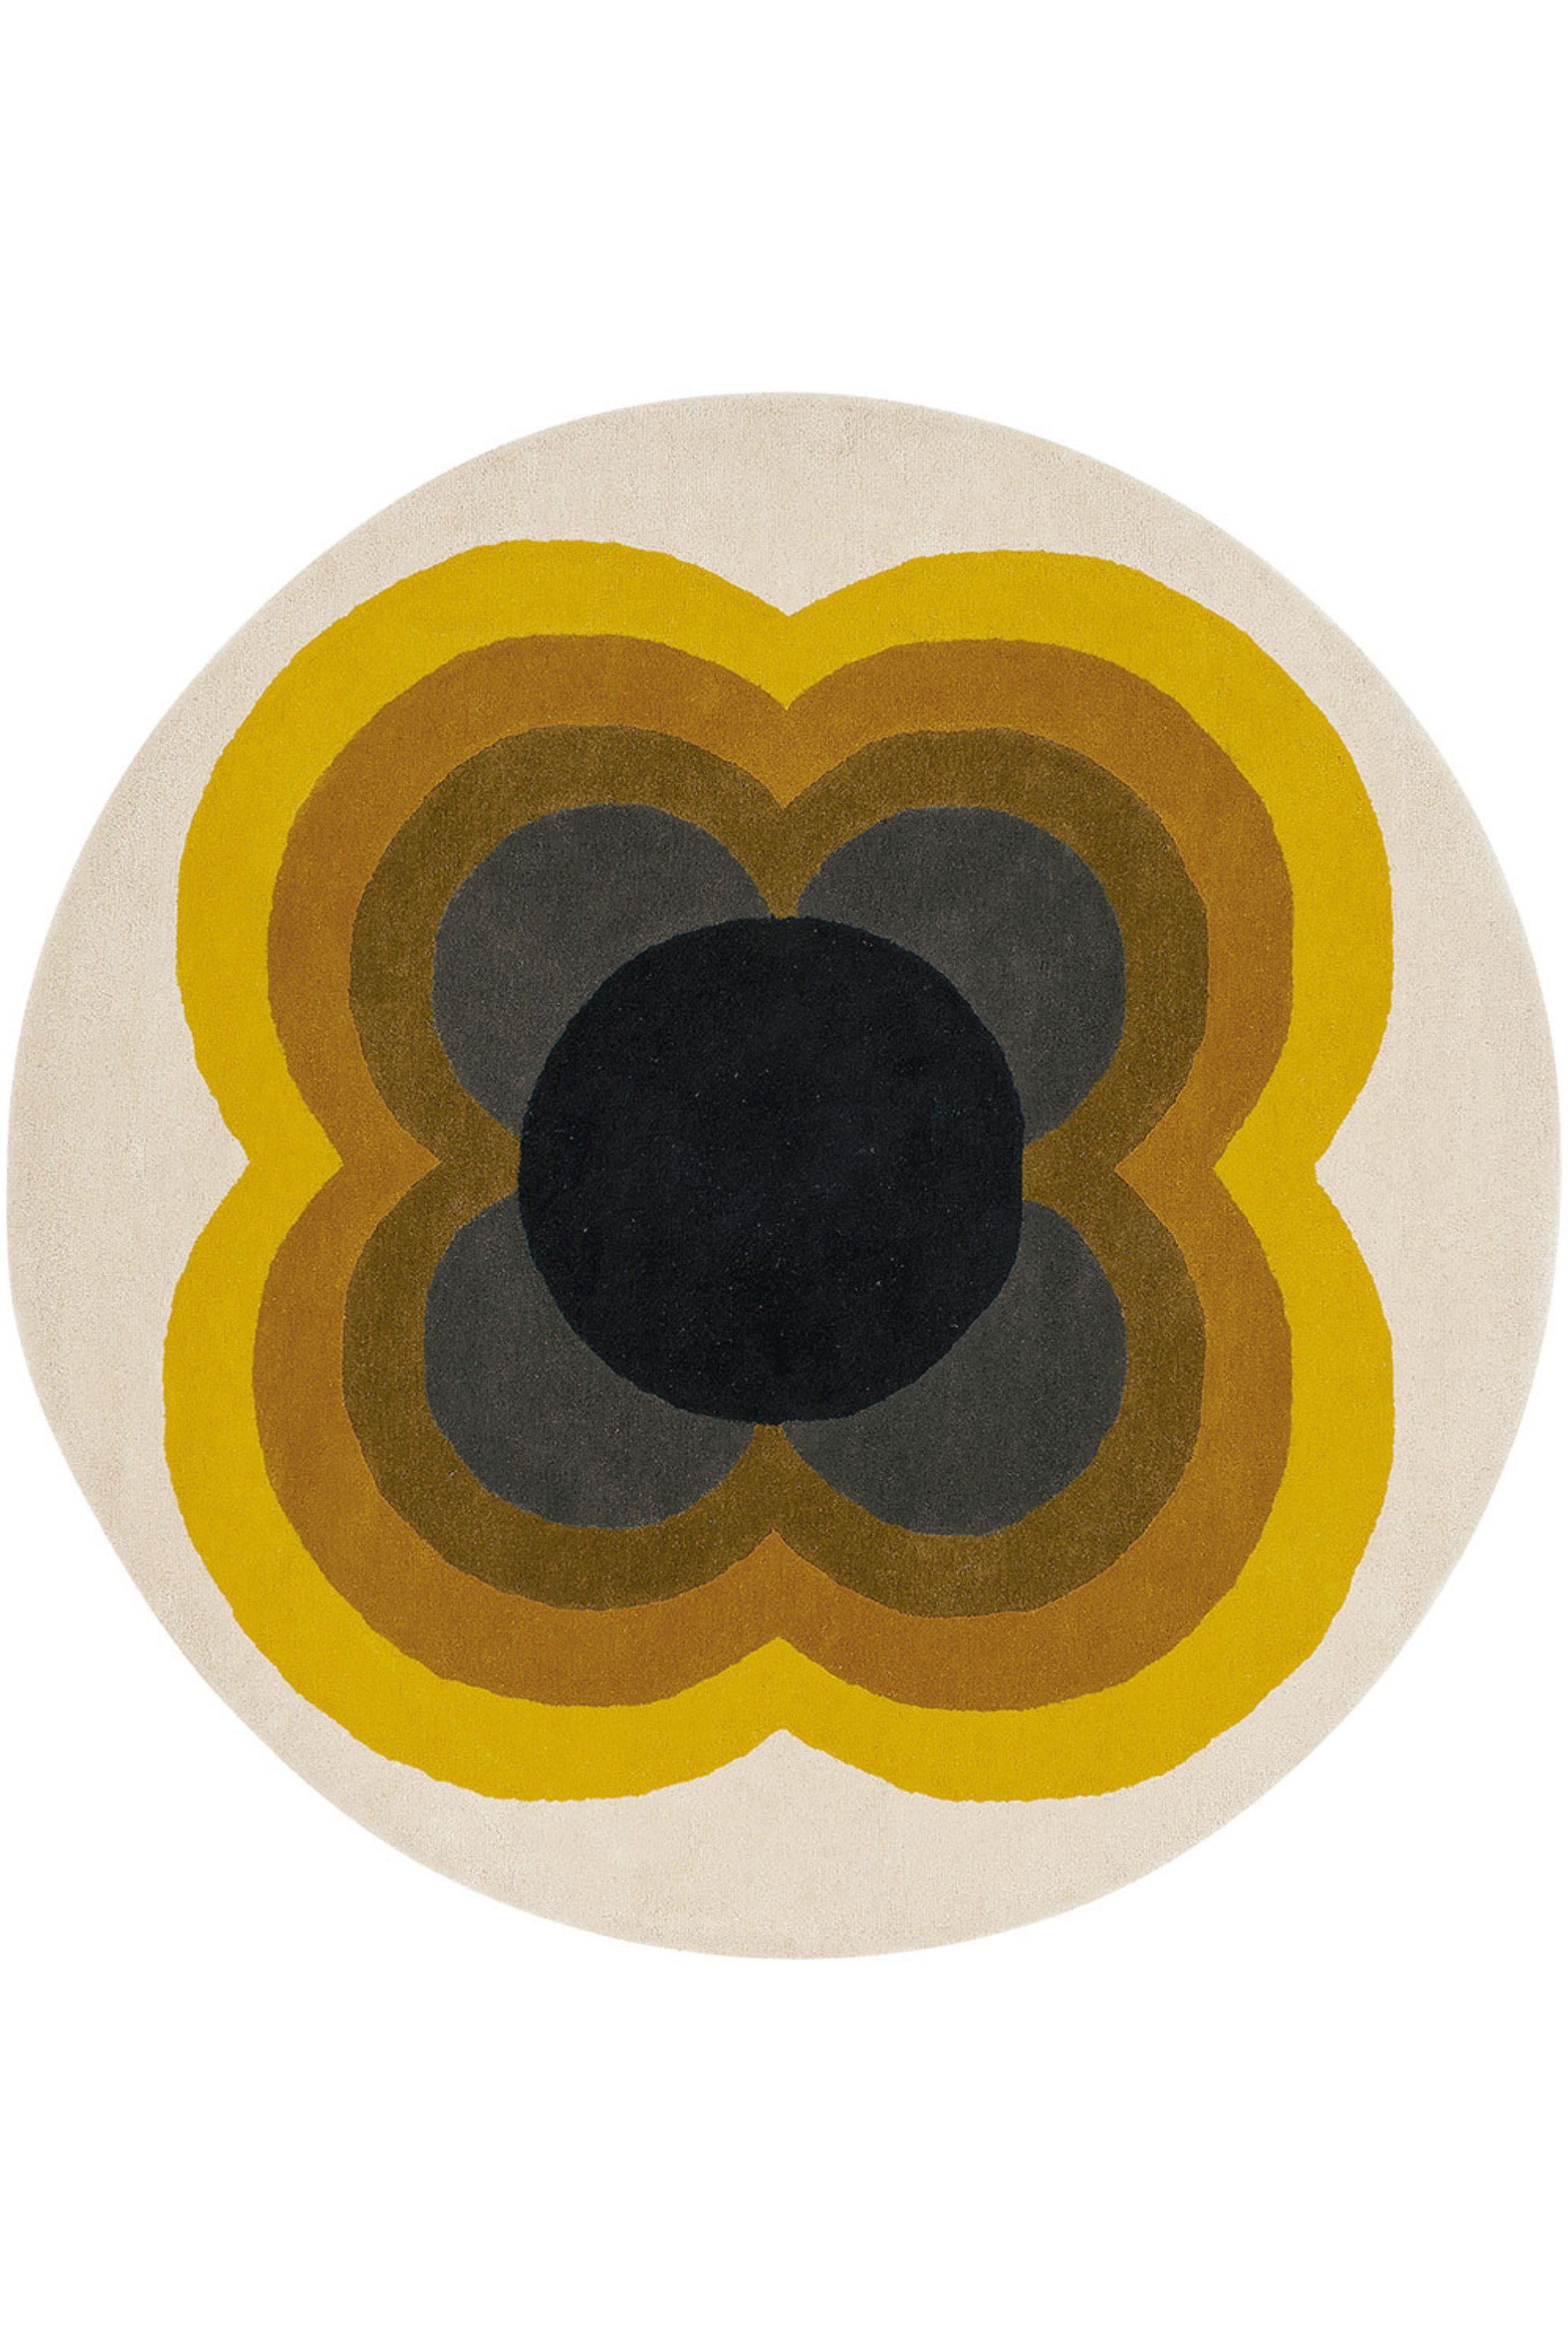 Orla kiely sunflower yellow circle rug